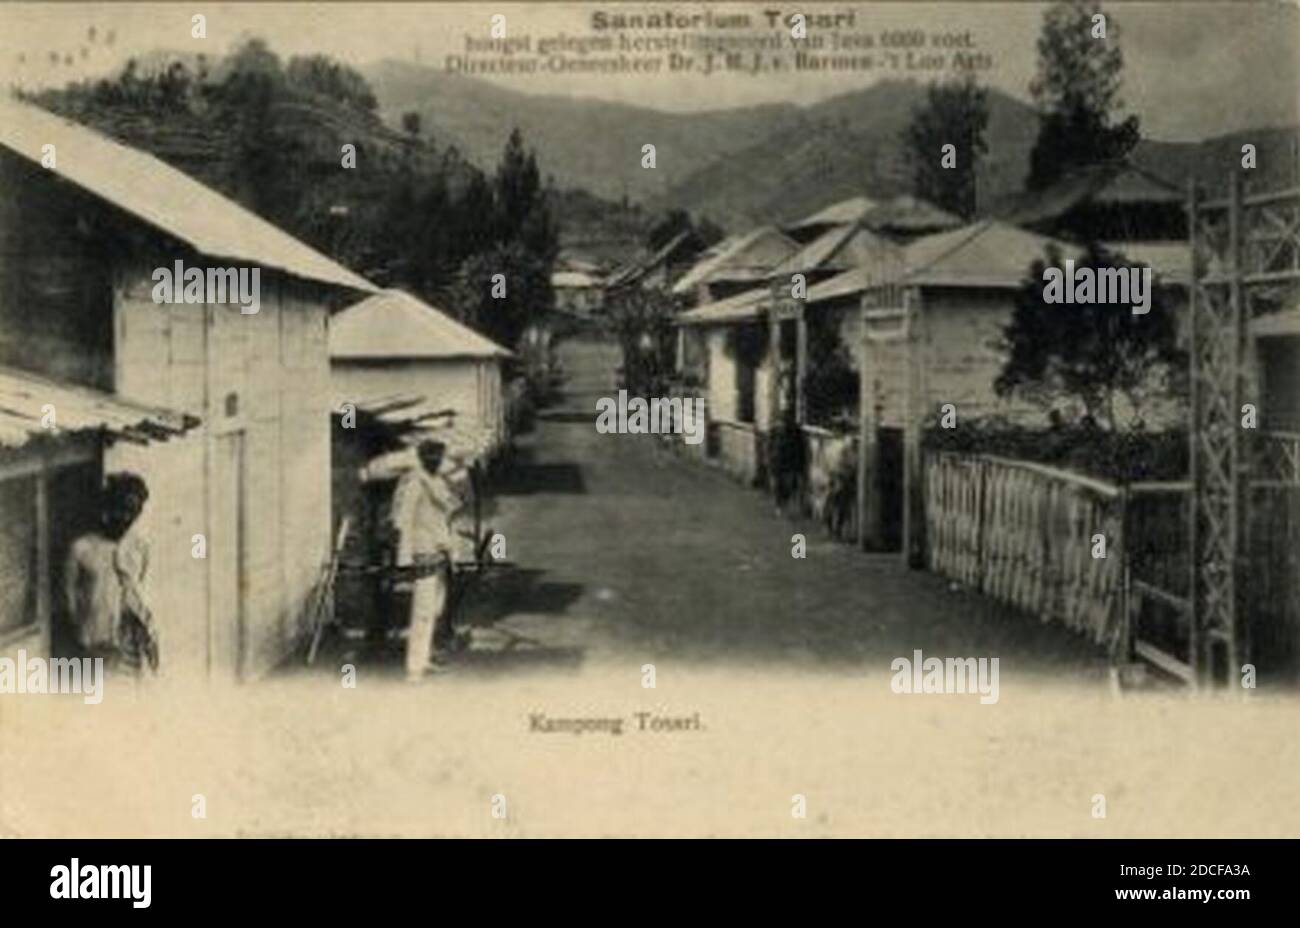 - Nijland J.M.CHS. Societeit Straat Soerabaia Soerabaja - Kampong Tosari - 1890 - 1910. Stockfoto